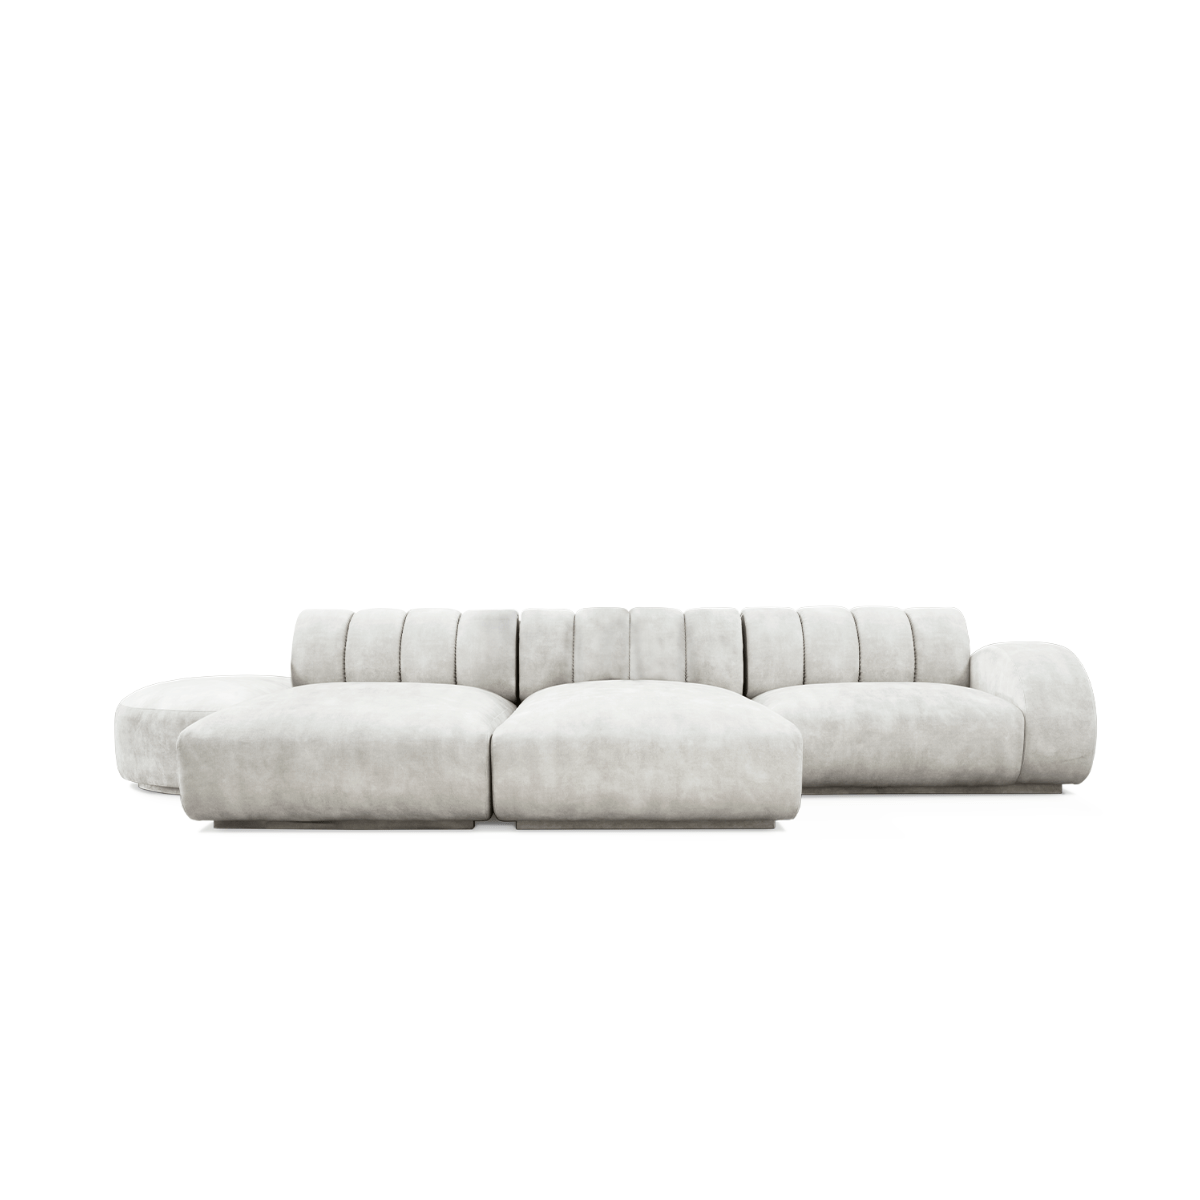 uitzondering maak een foto etiket Cassia Modular Sofa by Caffe Latte | Covet House Curated Design